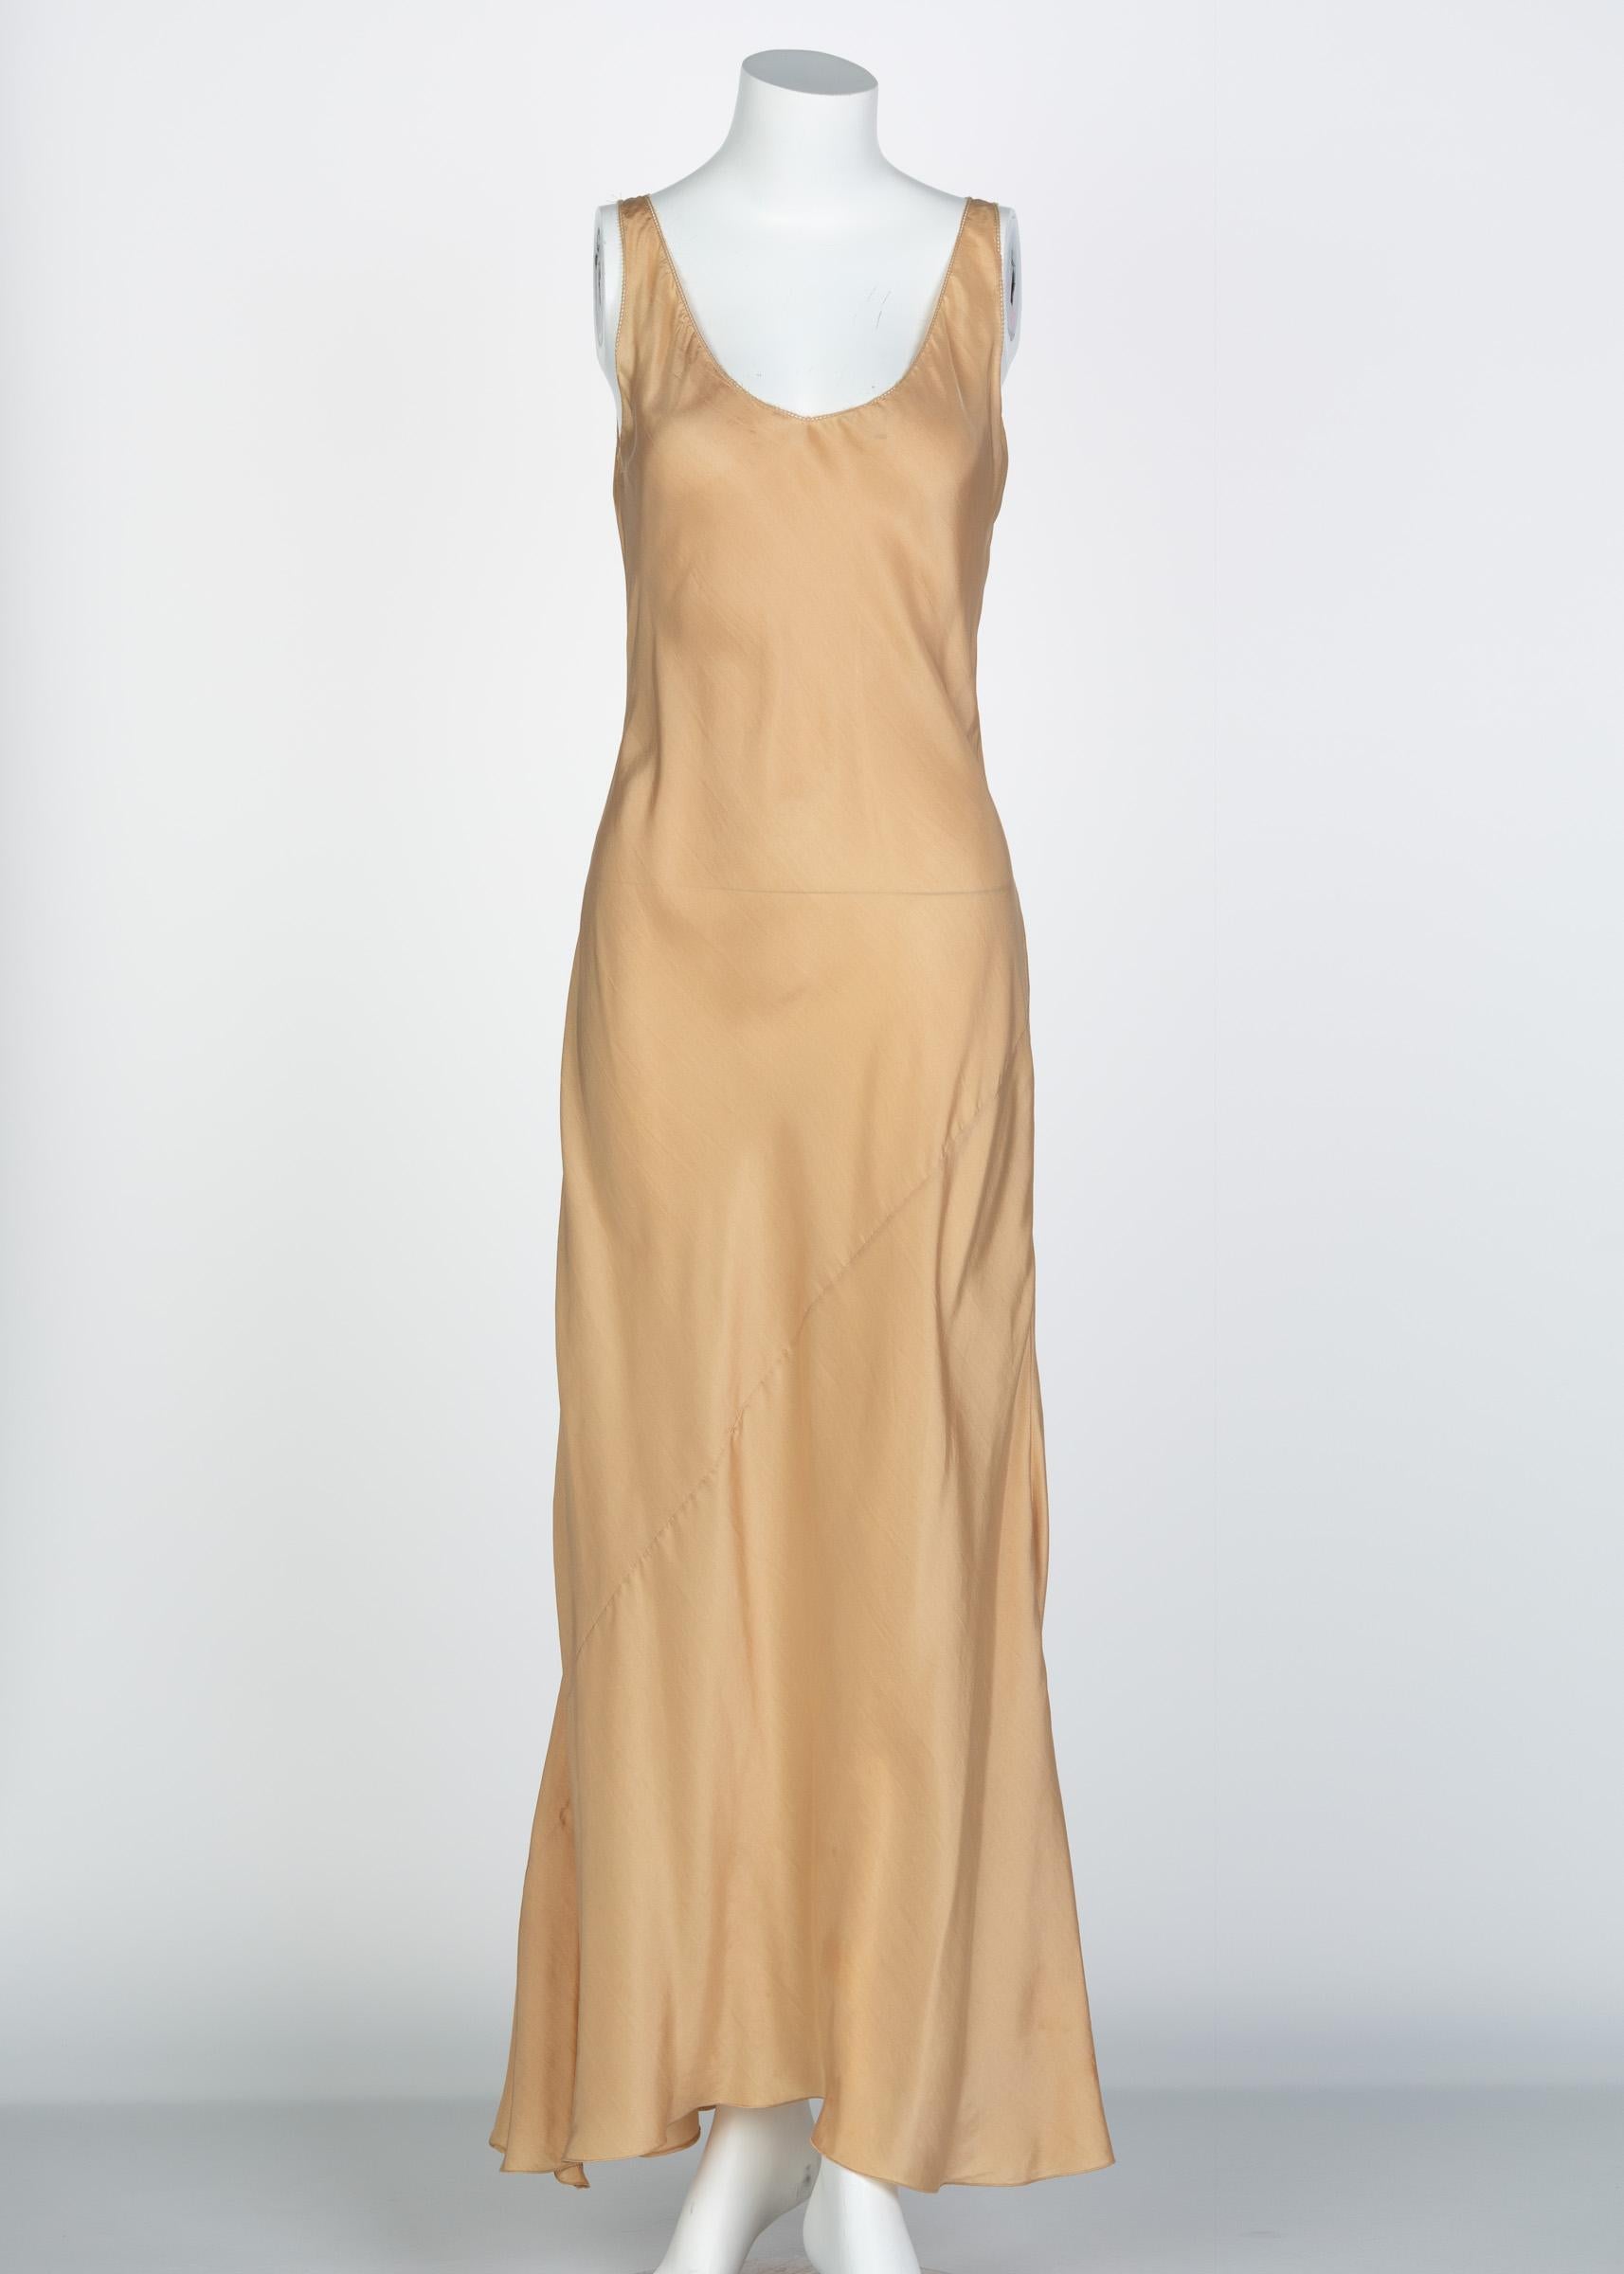 Nina Ricci Yellow Silk Organza Sleeveless Evening Dress, 2009 3